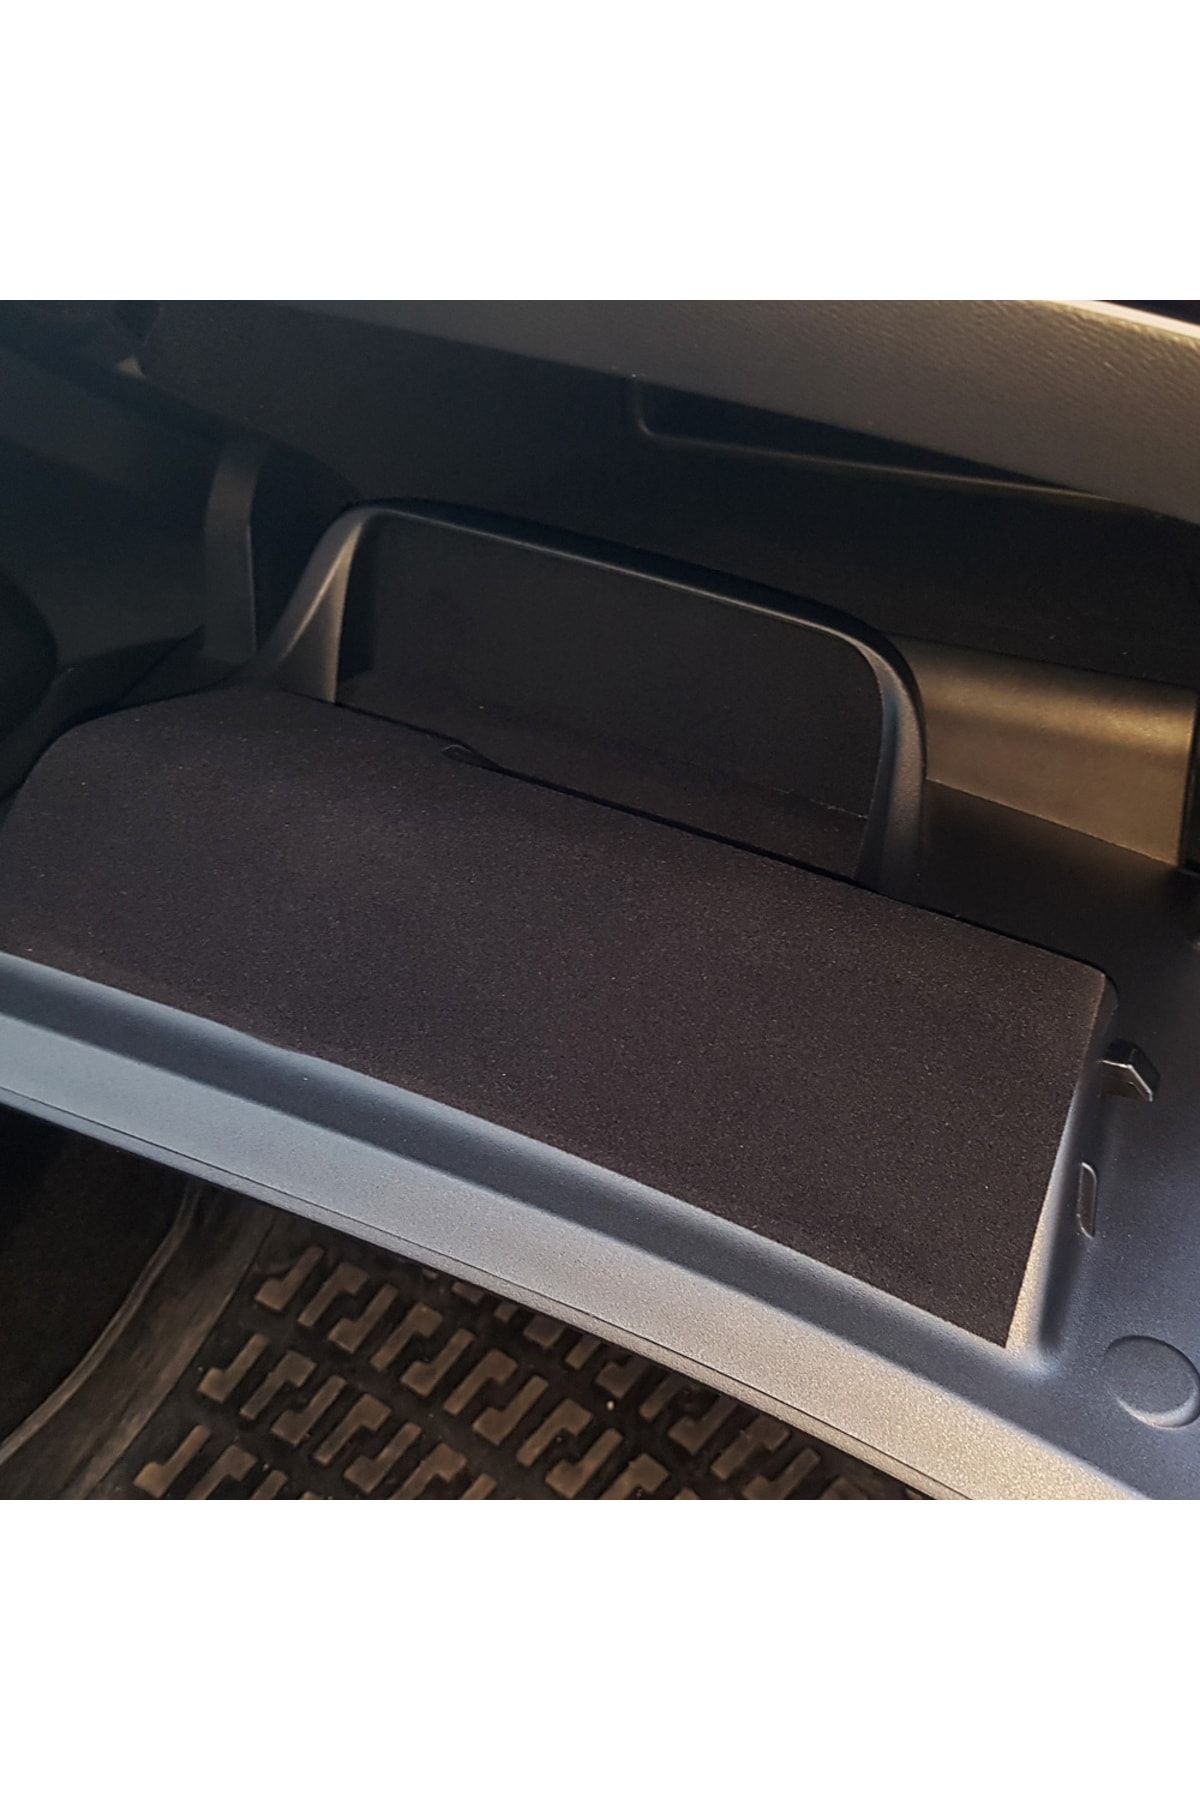 GRAFİCAR Opel Corsa F Comfort Set - Interior Trim Fabric Velvet Coating -  Product for Sound Insulation Purposes